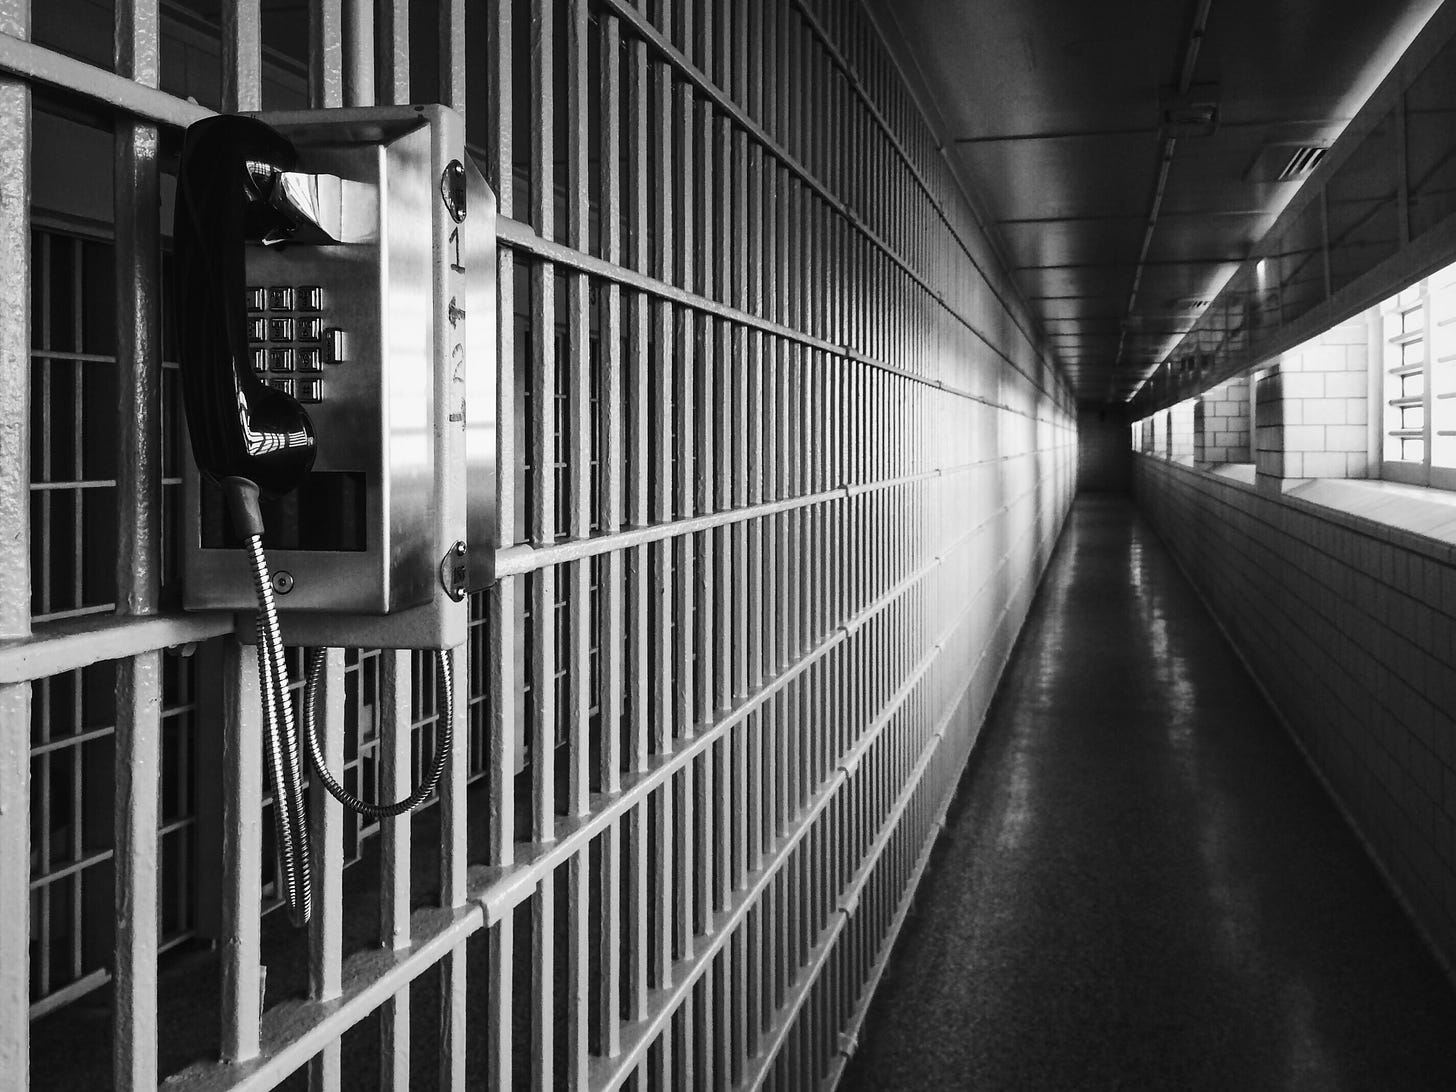 A photo of a phone inside a jail